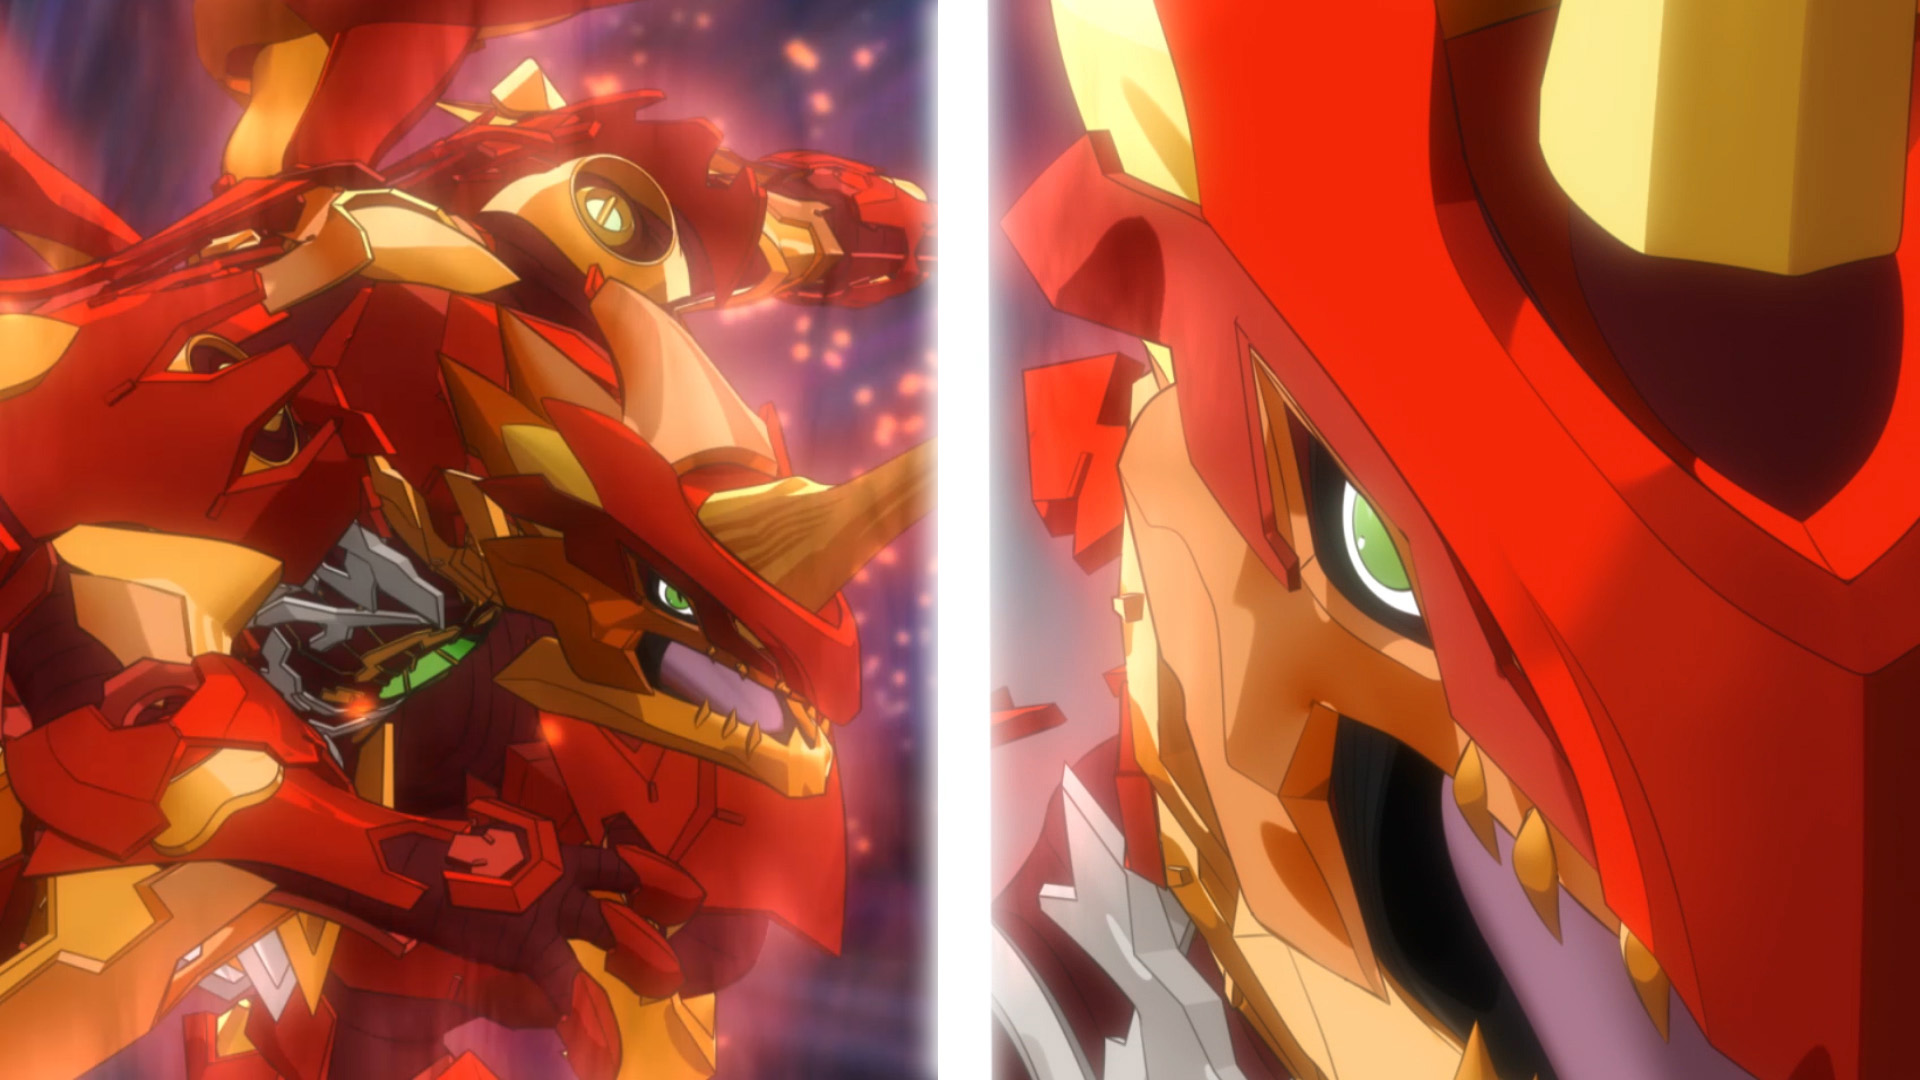 Bakugan SUPER Evolution! Titan Dragonoid! Dragonoid's powerful new Evo bursts into battle in the newest #BakuganBattlePlanet animation highlight! #Bakugan